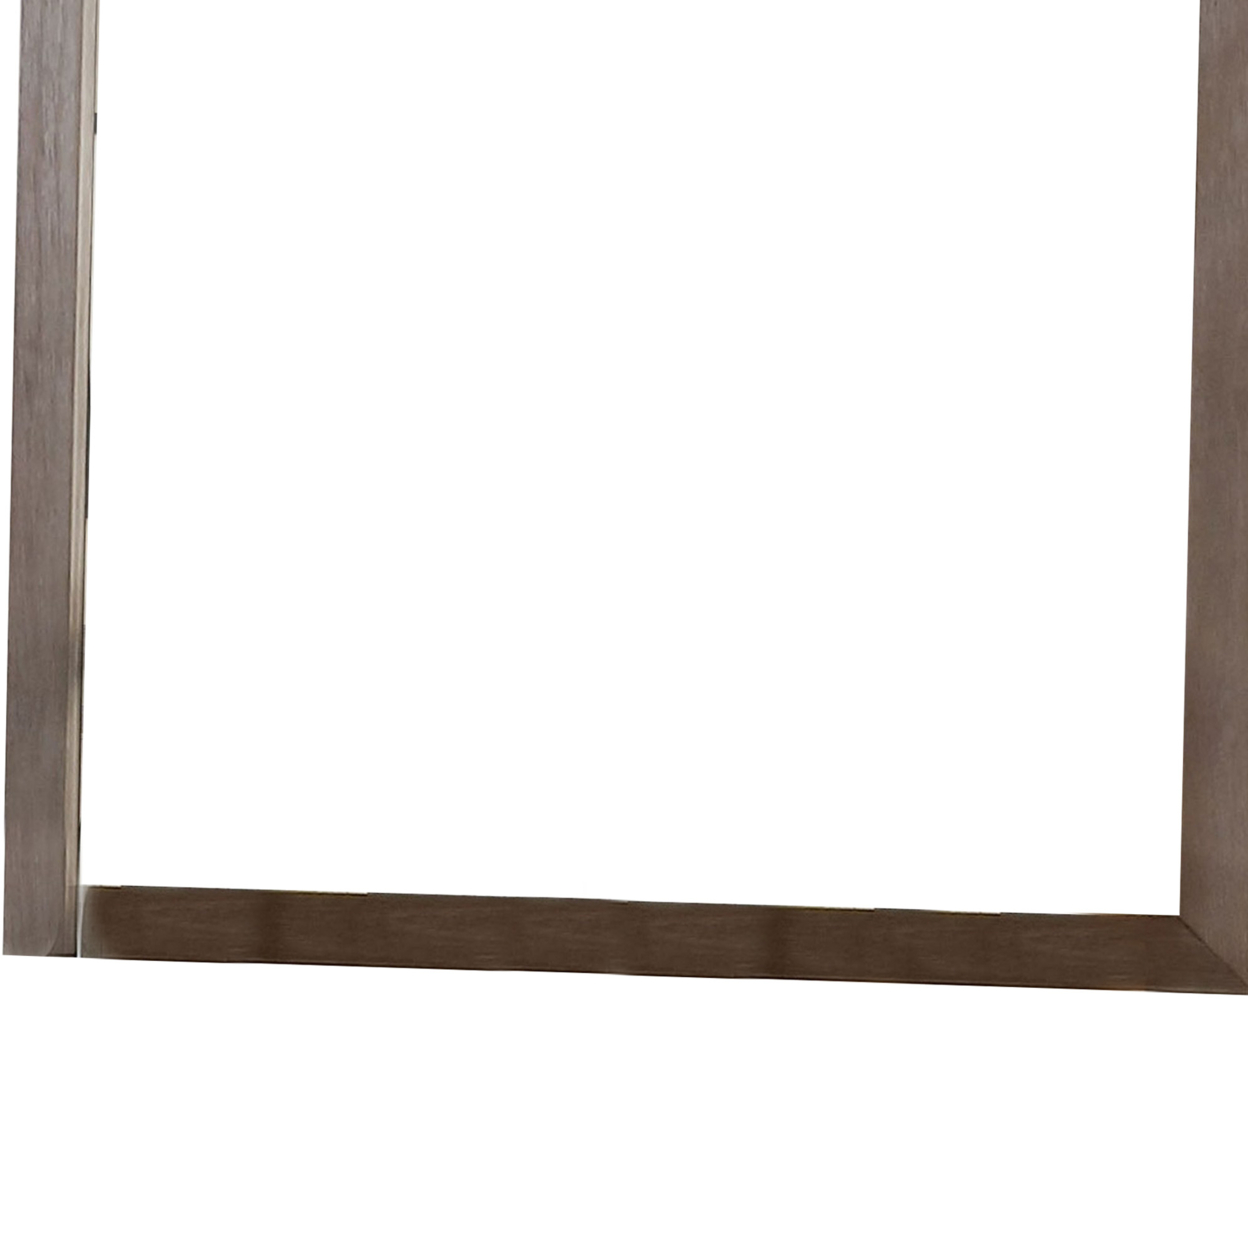 36 Inch Mirror With Rectangular Wooden Frame, Brown- Saltoro Sherpi